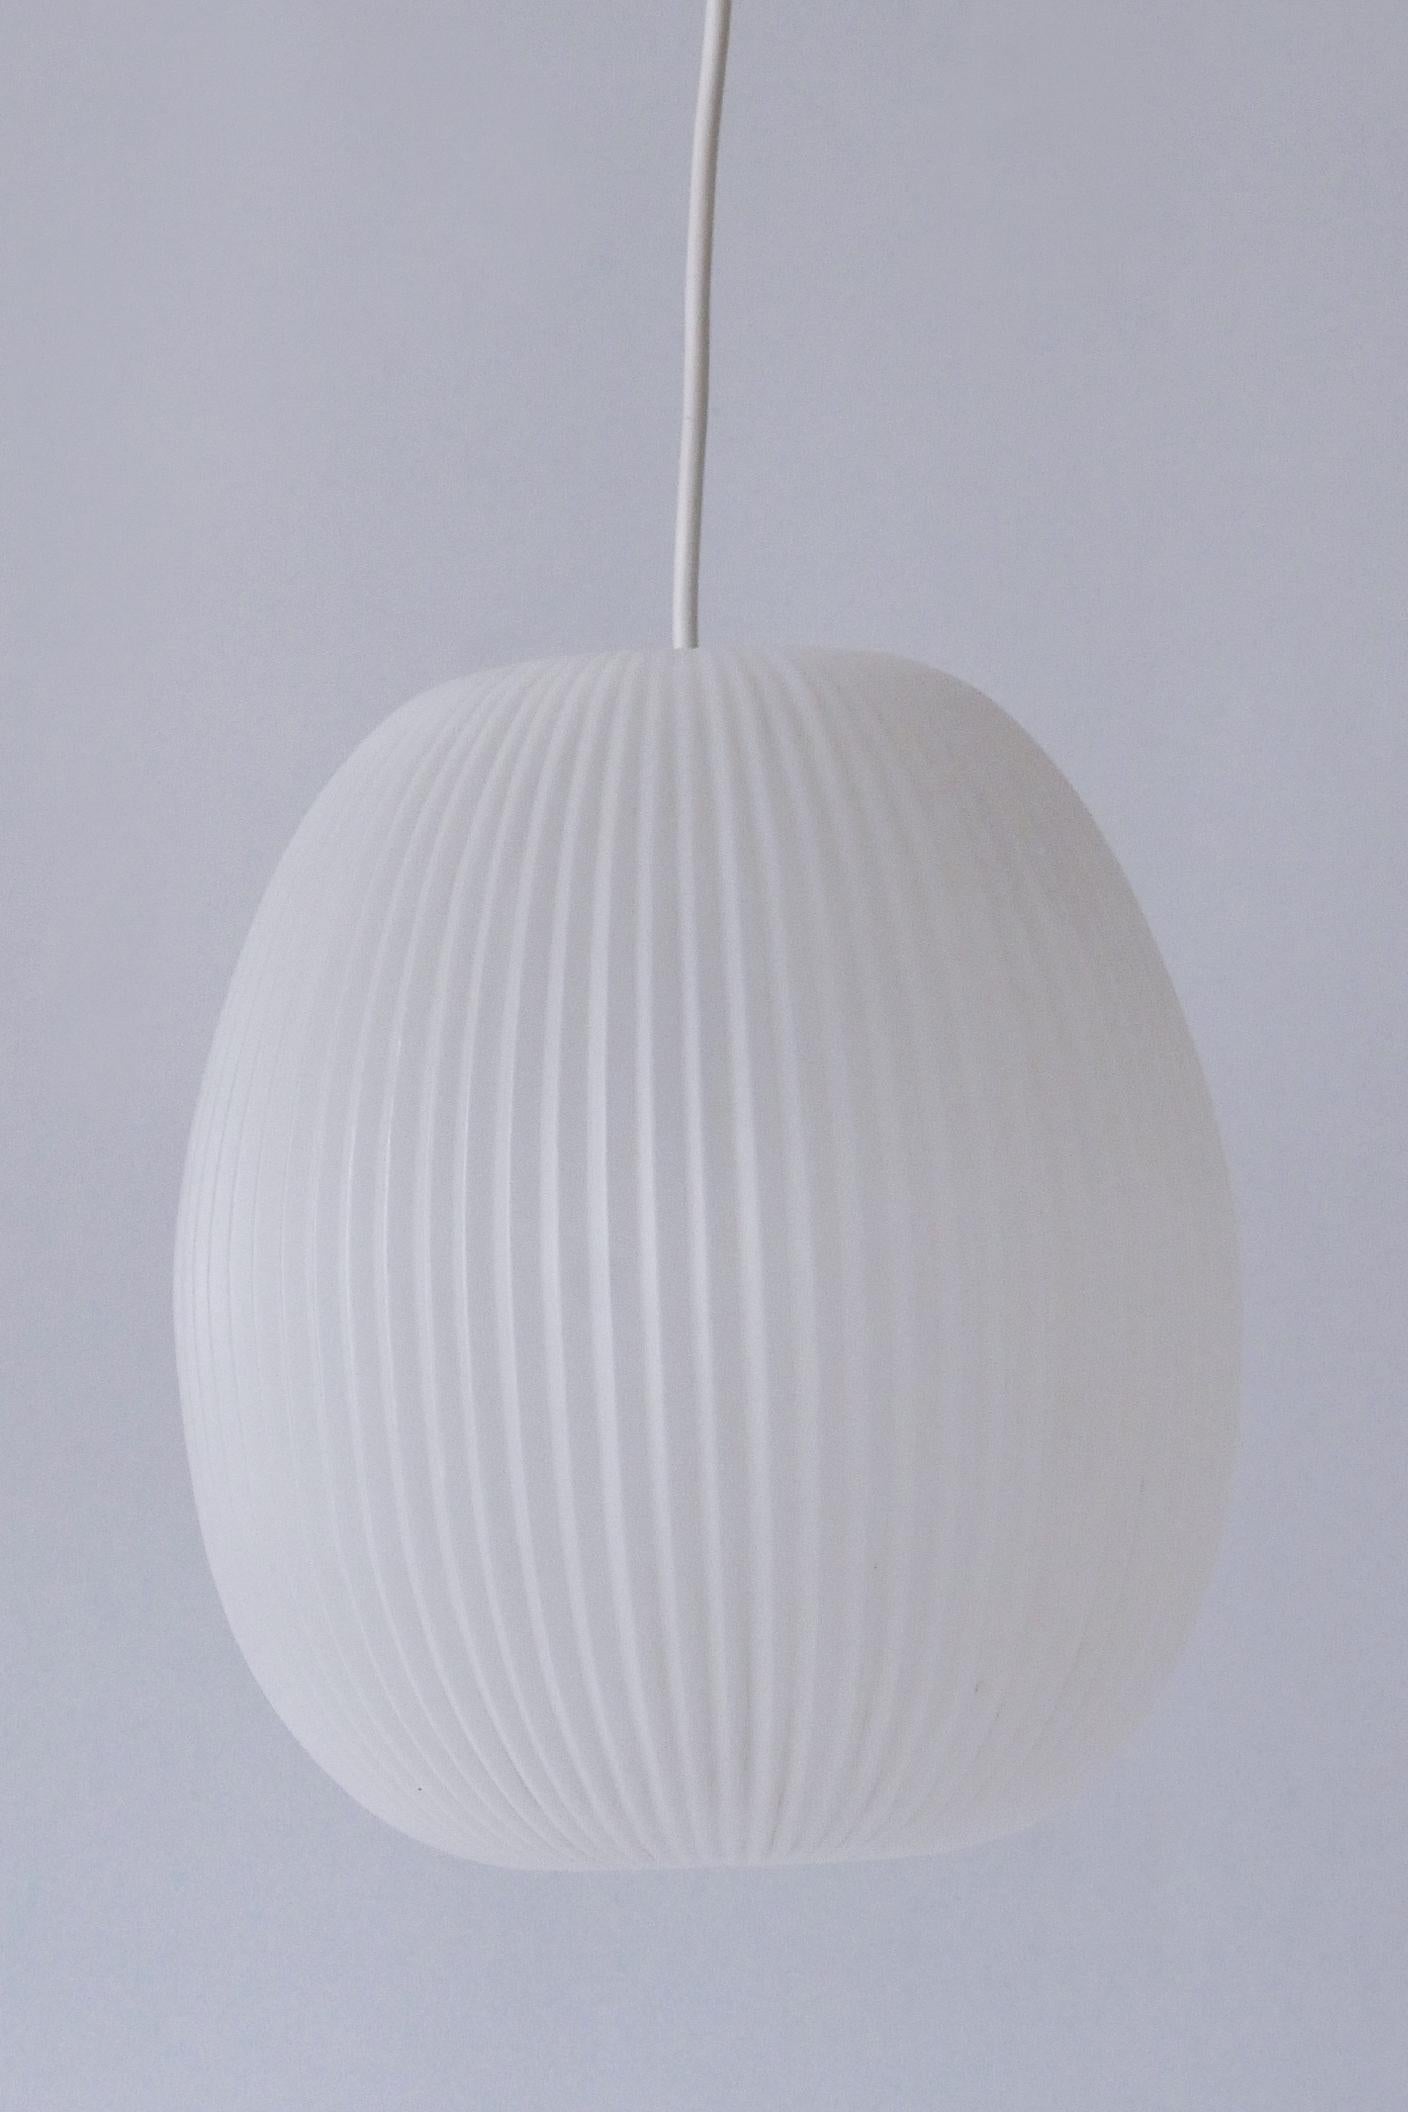 Lovely Mid-Century Modern Pendant Lamp by Aloys F. Gangkofner für Erco 1960s For Sale 4